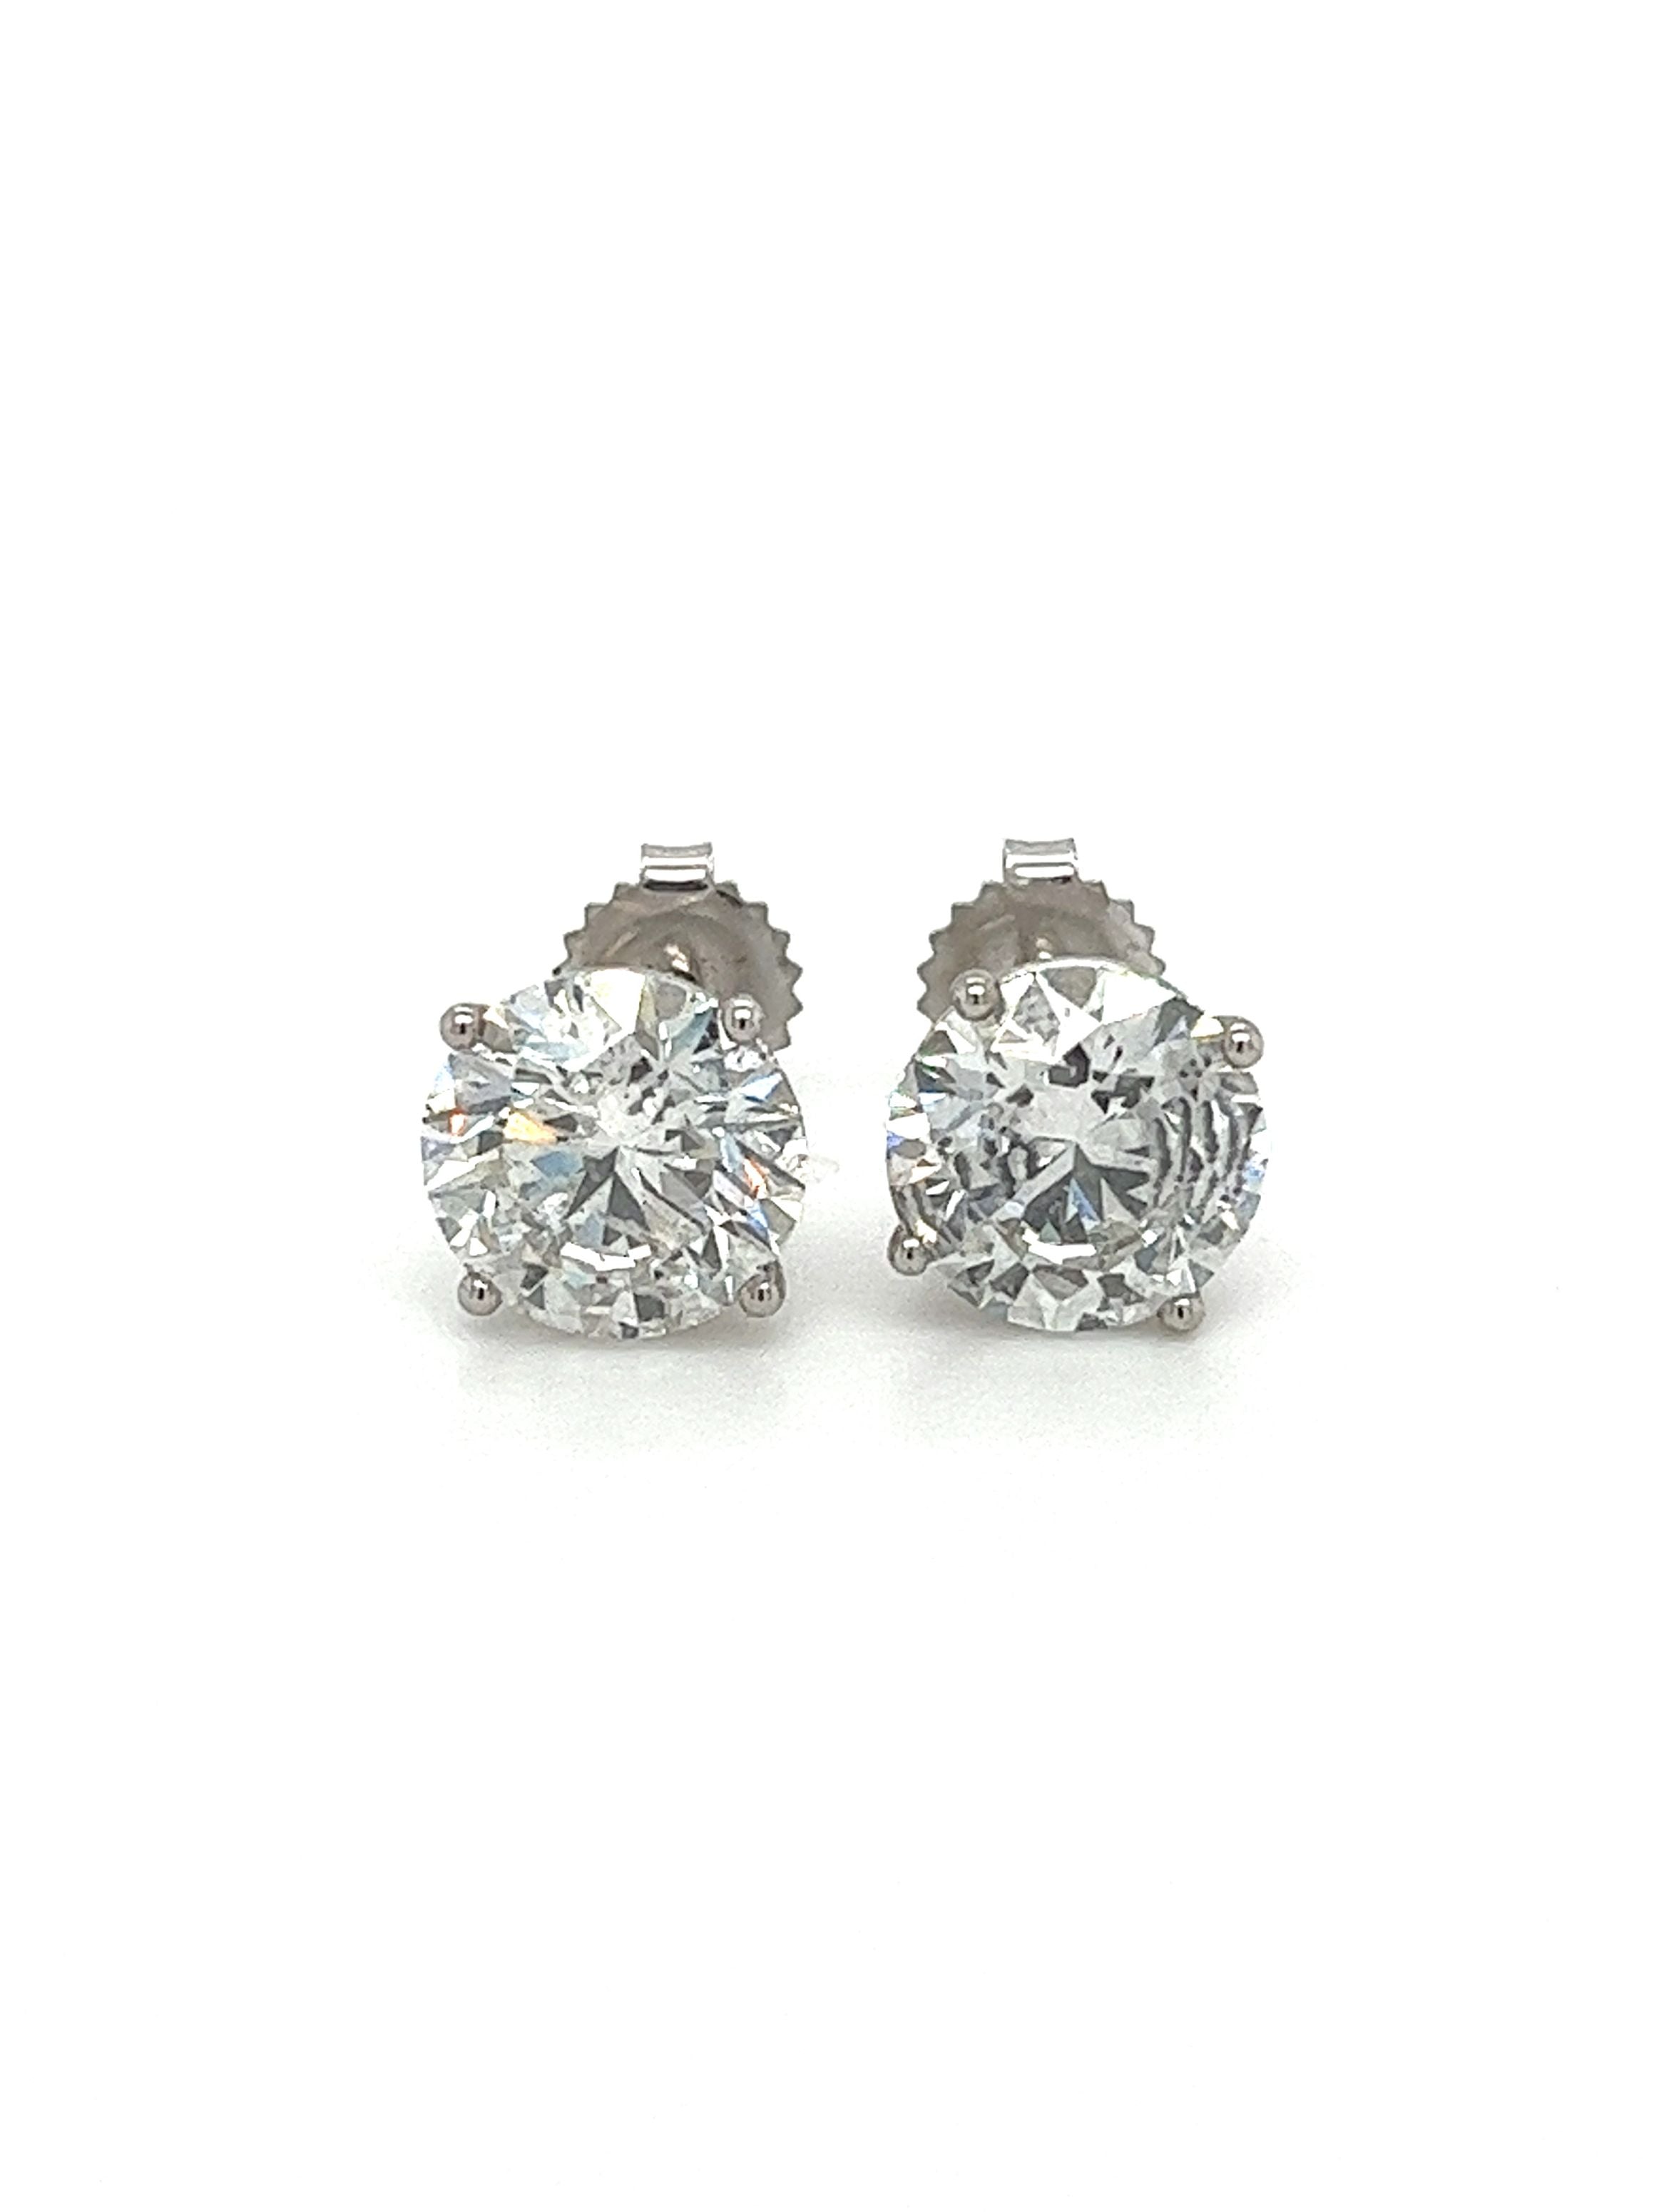 7_03-Carat-Total-Lab-Grown-CVD-Diamond-Martini-Stud-Earrings-in-14K-White-Gold-Rings.jpg